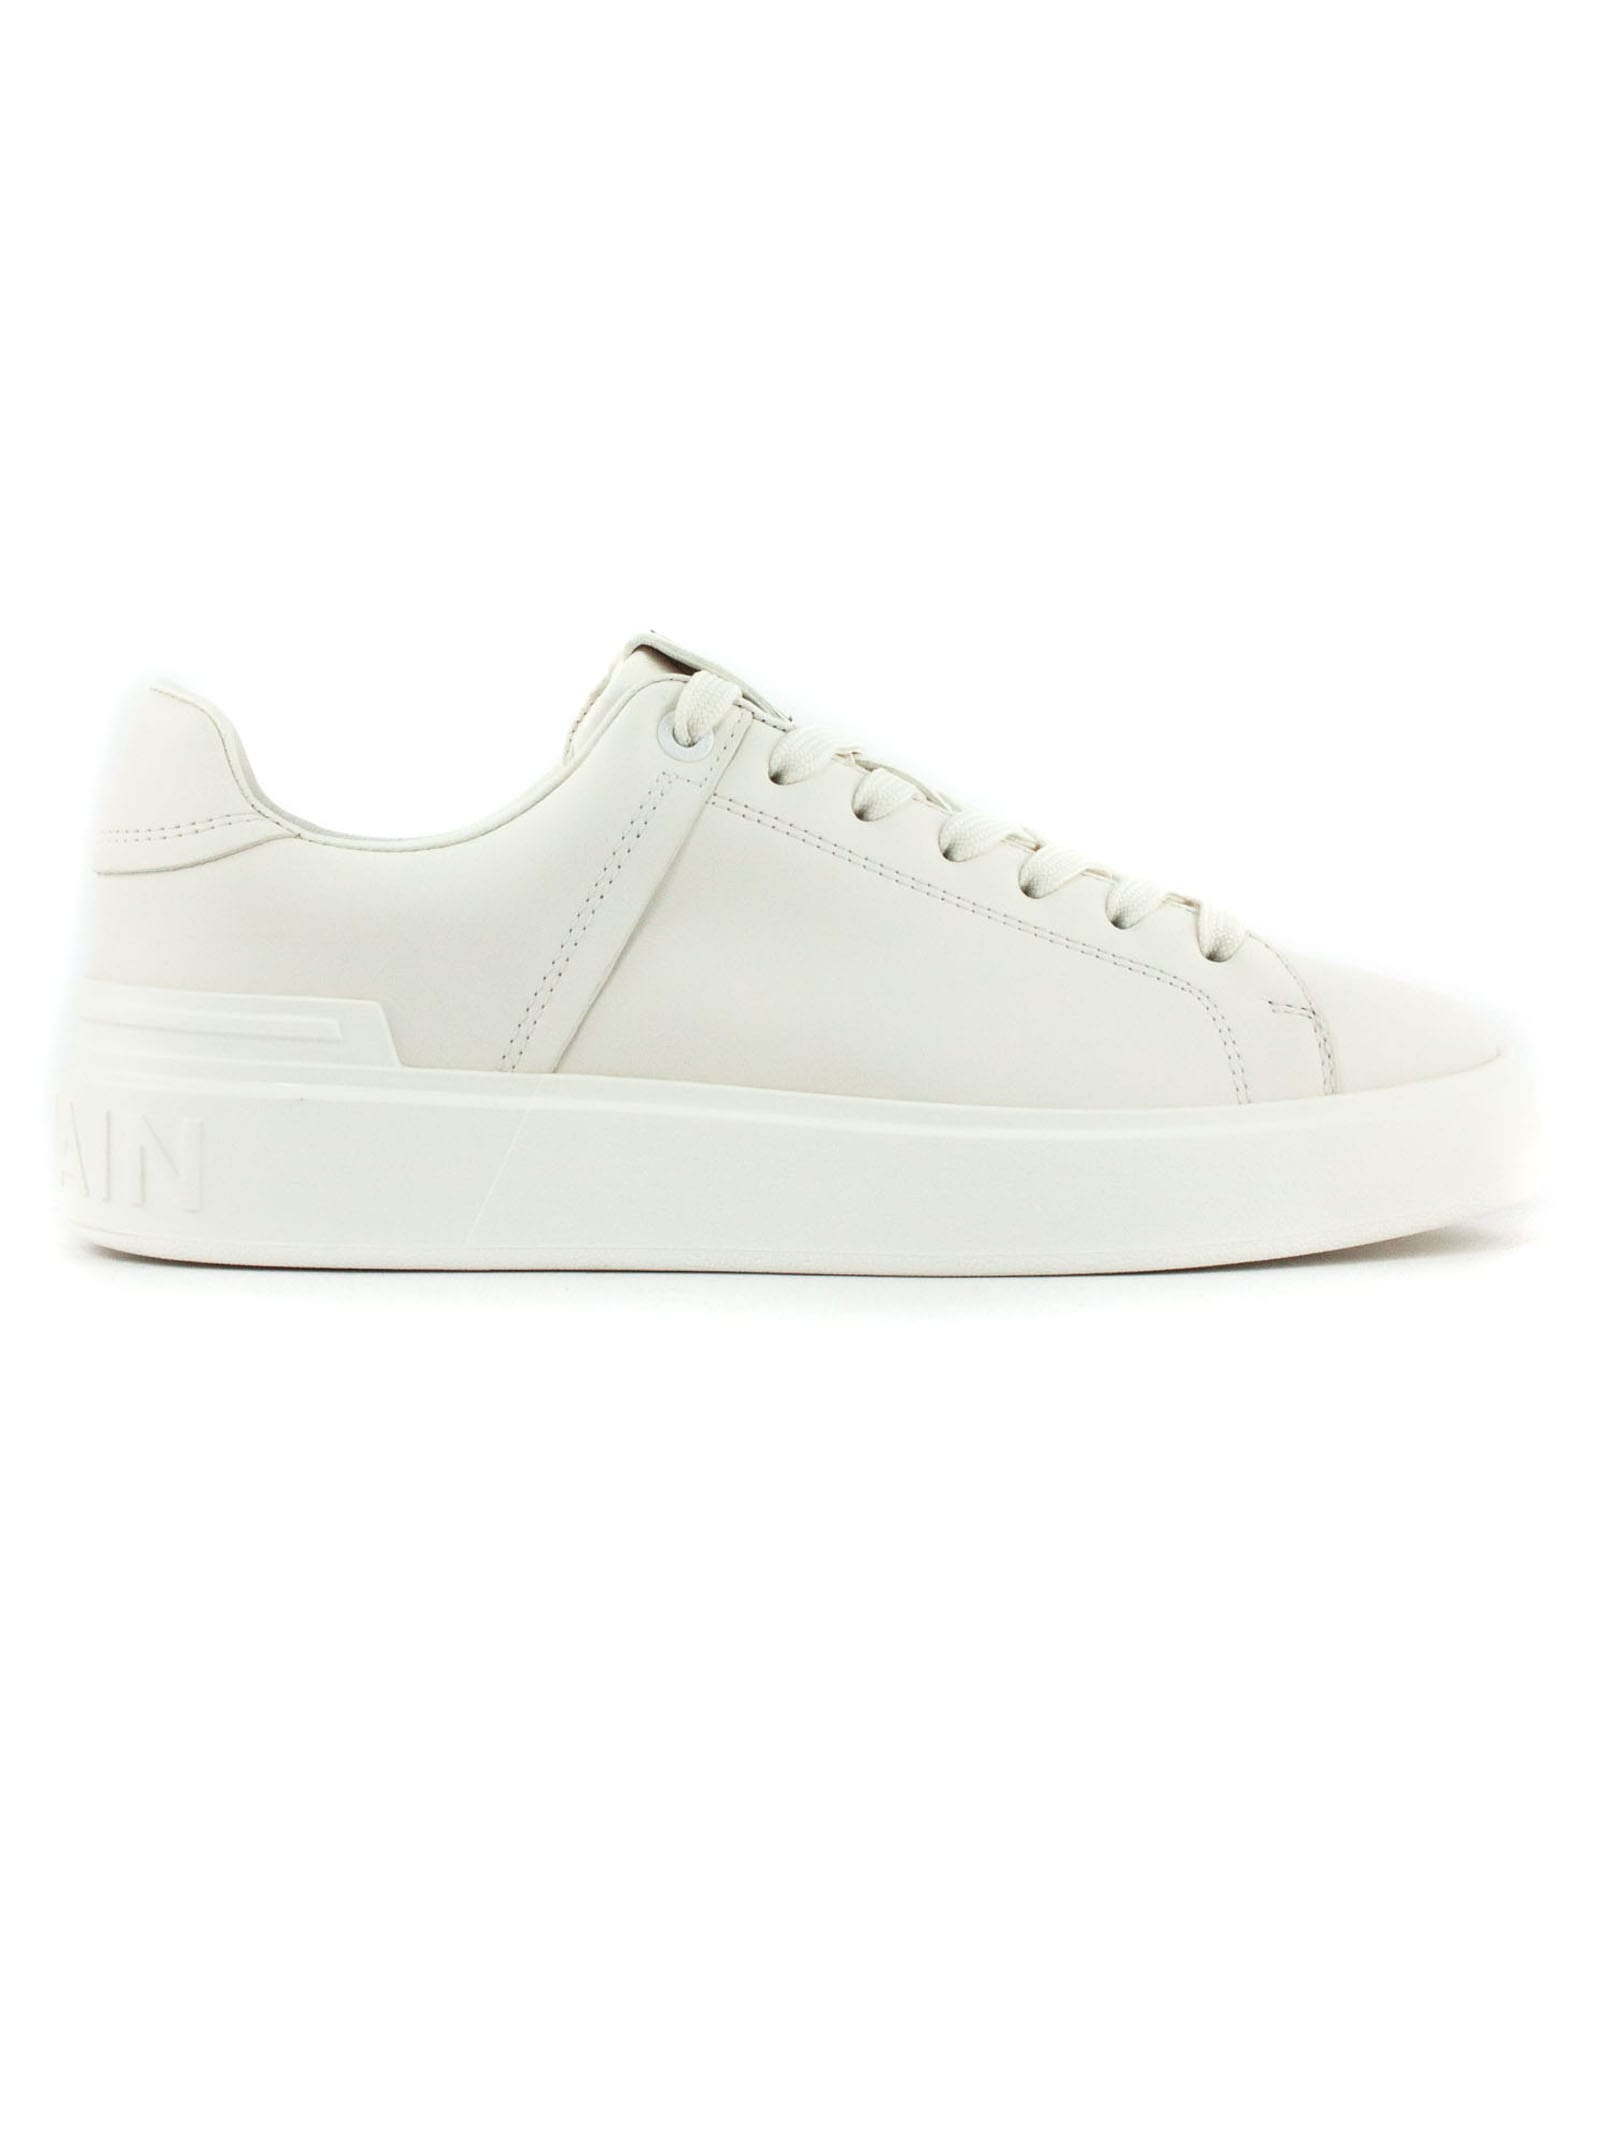 Balmain White Calfskin Leather Sneakers